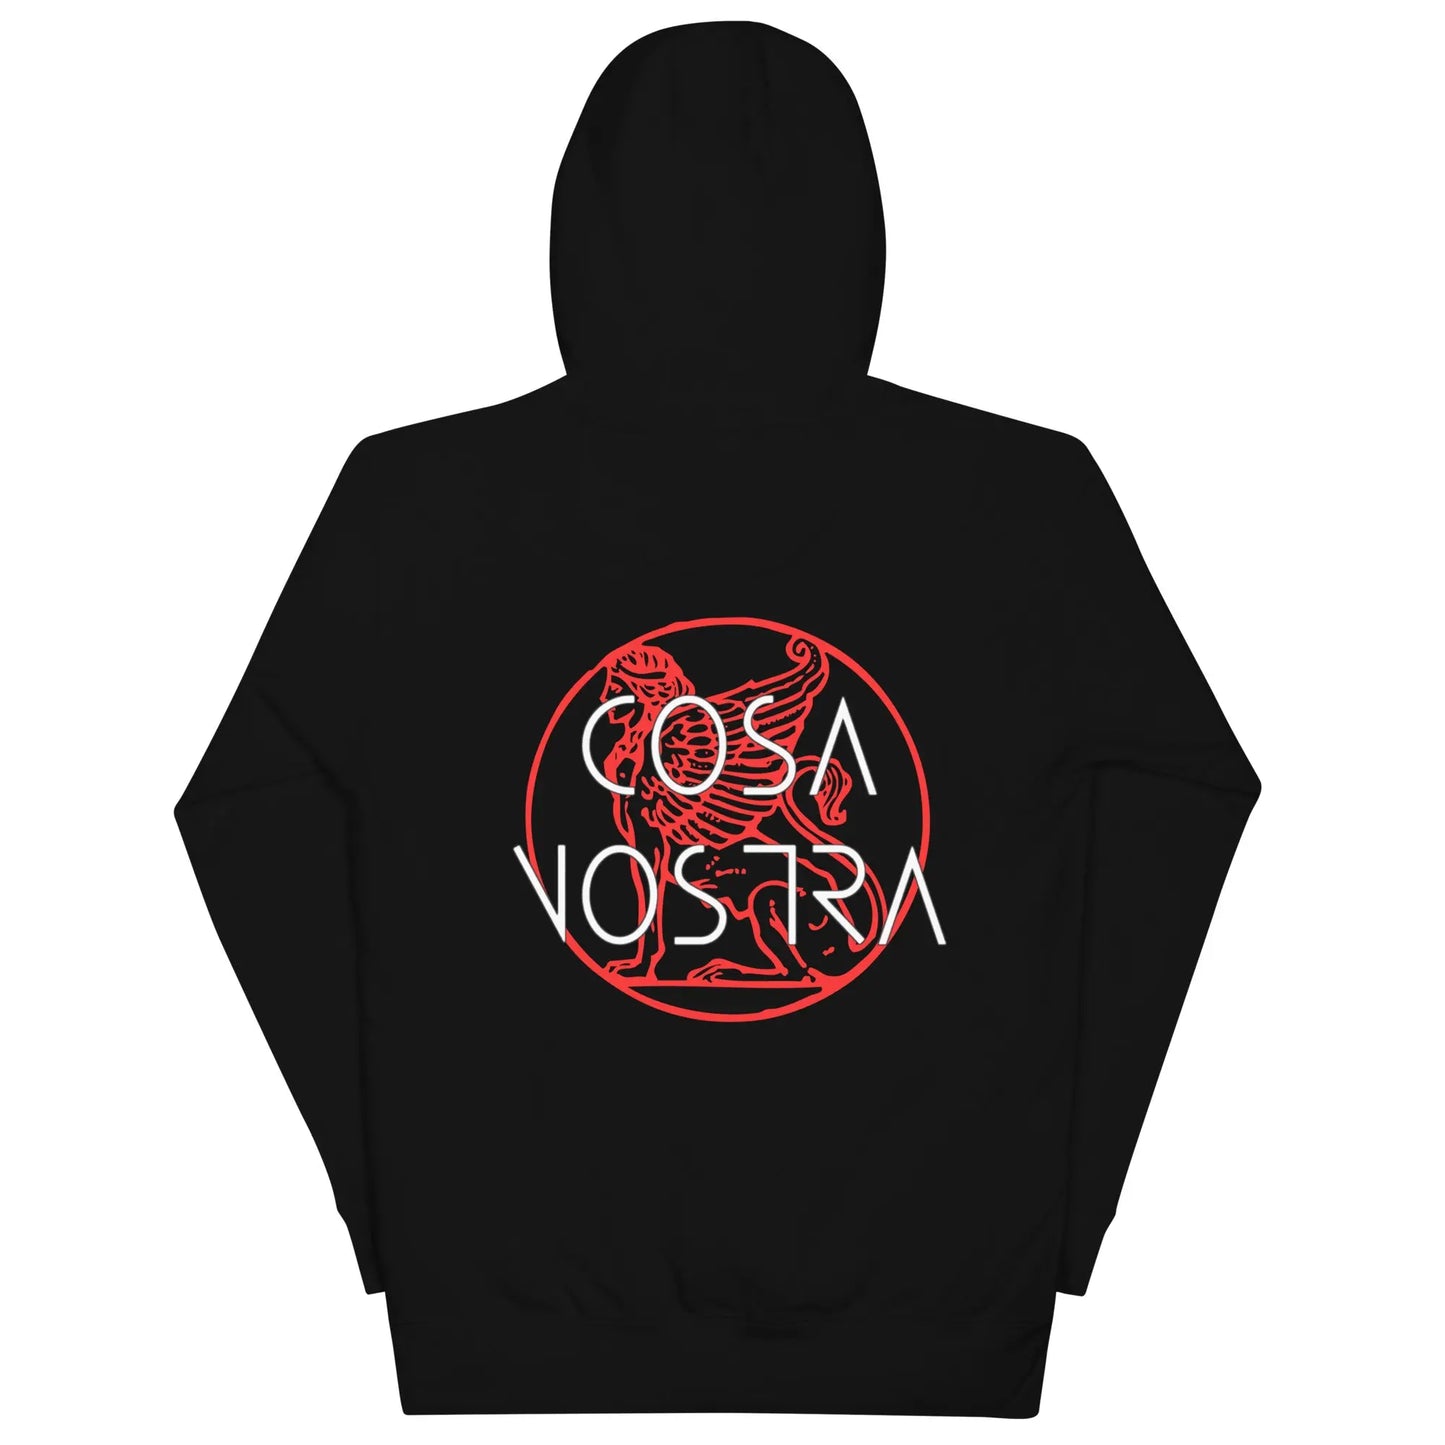 NLB VINTAGE "COSA NOSTRA" ×REDRUM SICARIO× Unisex Hoodie NLB Vintage